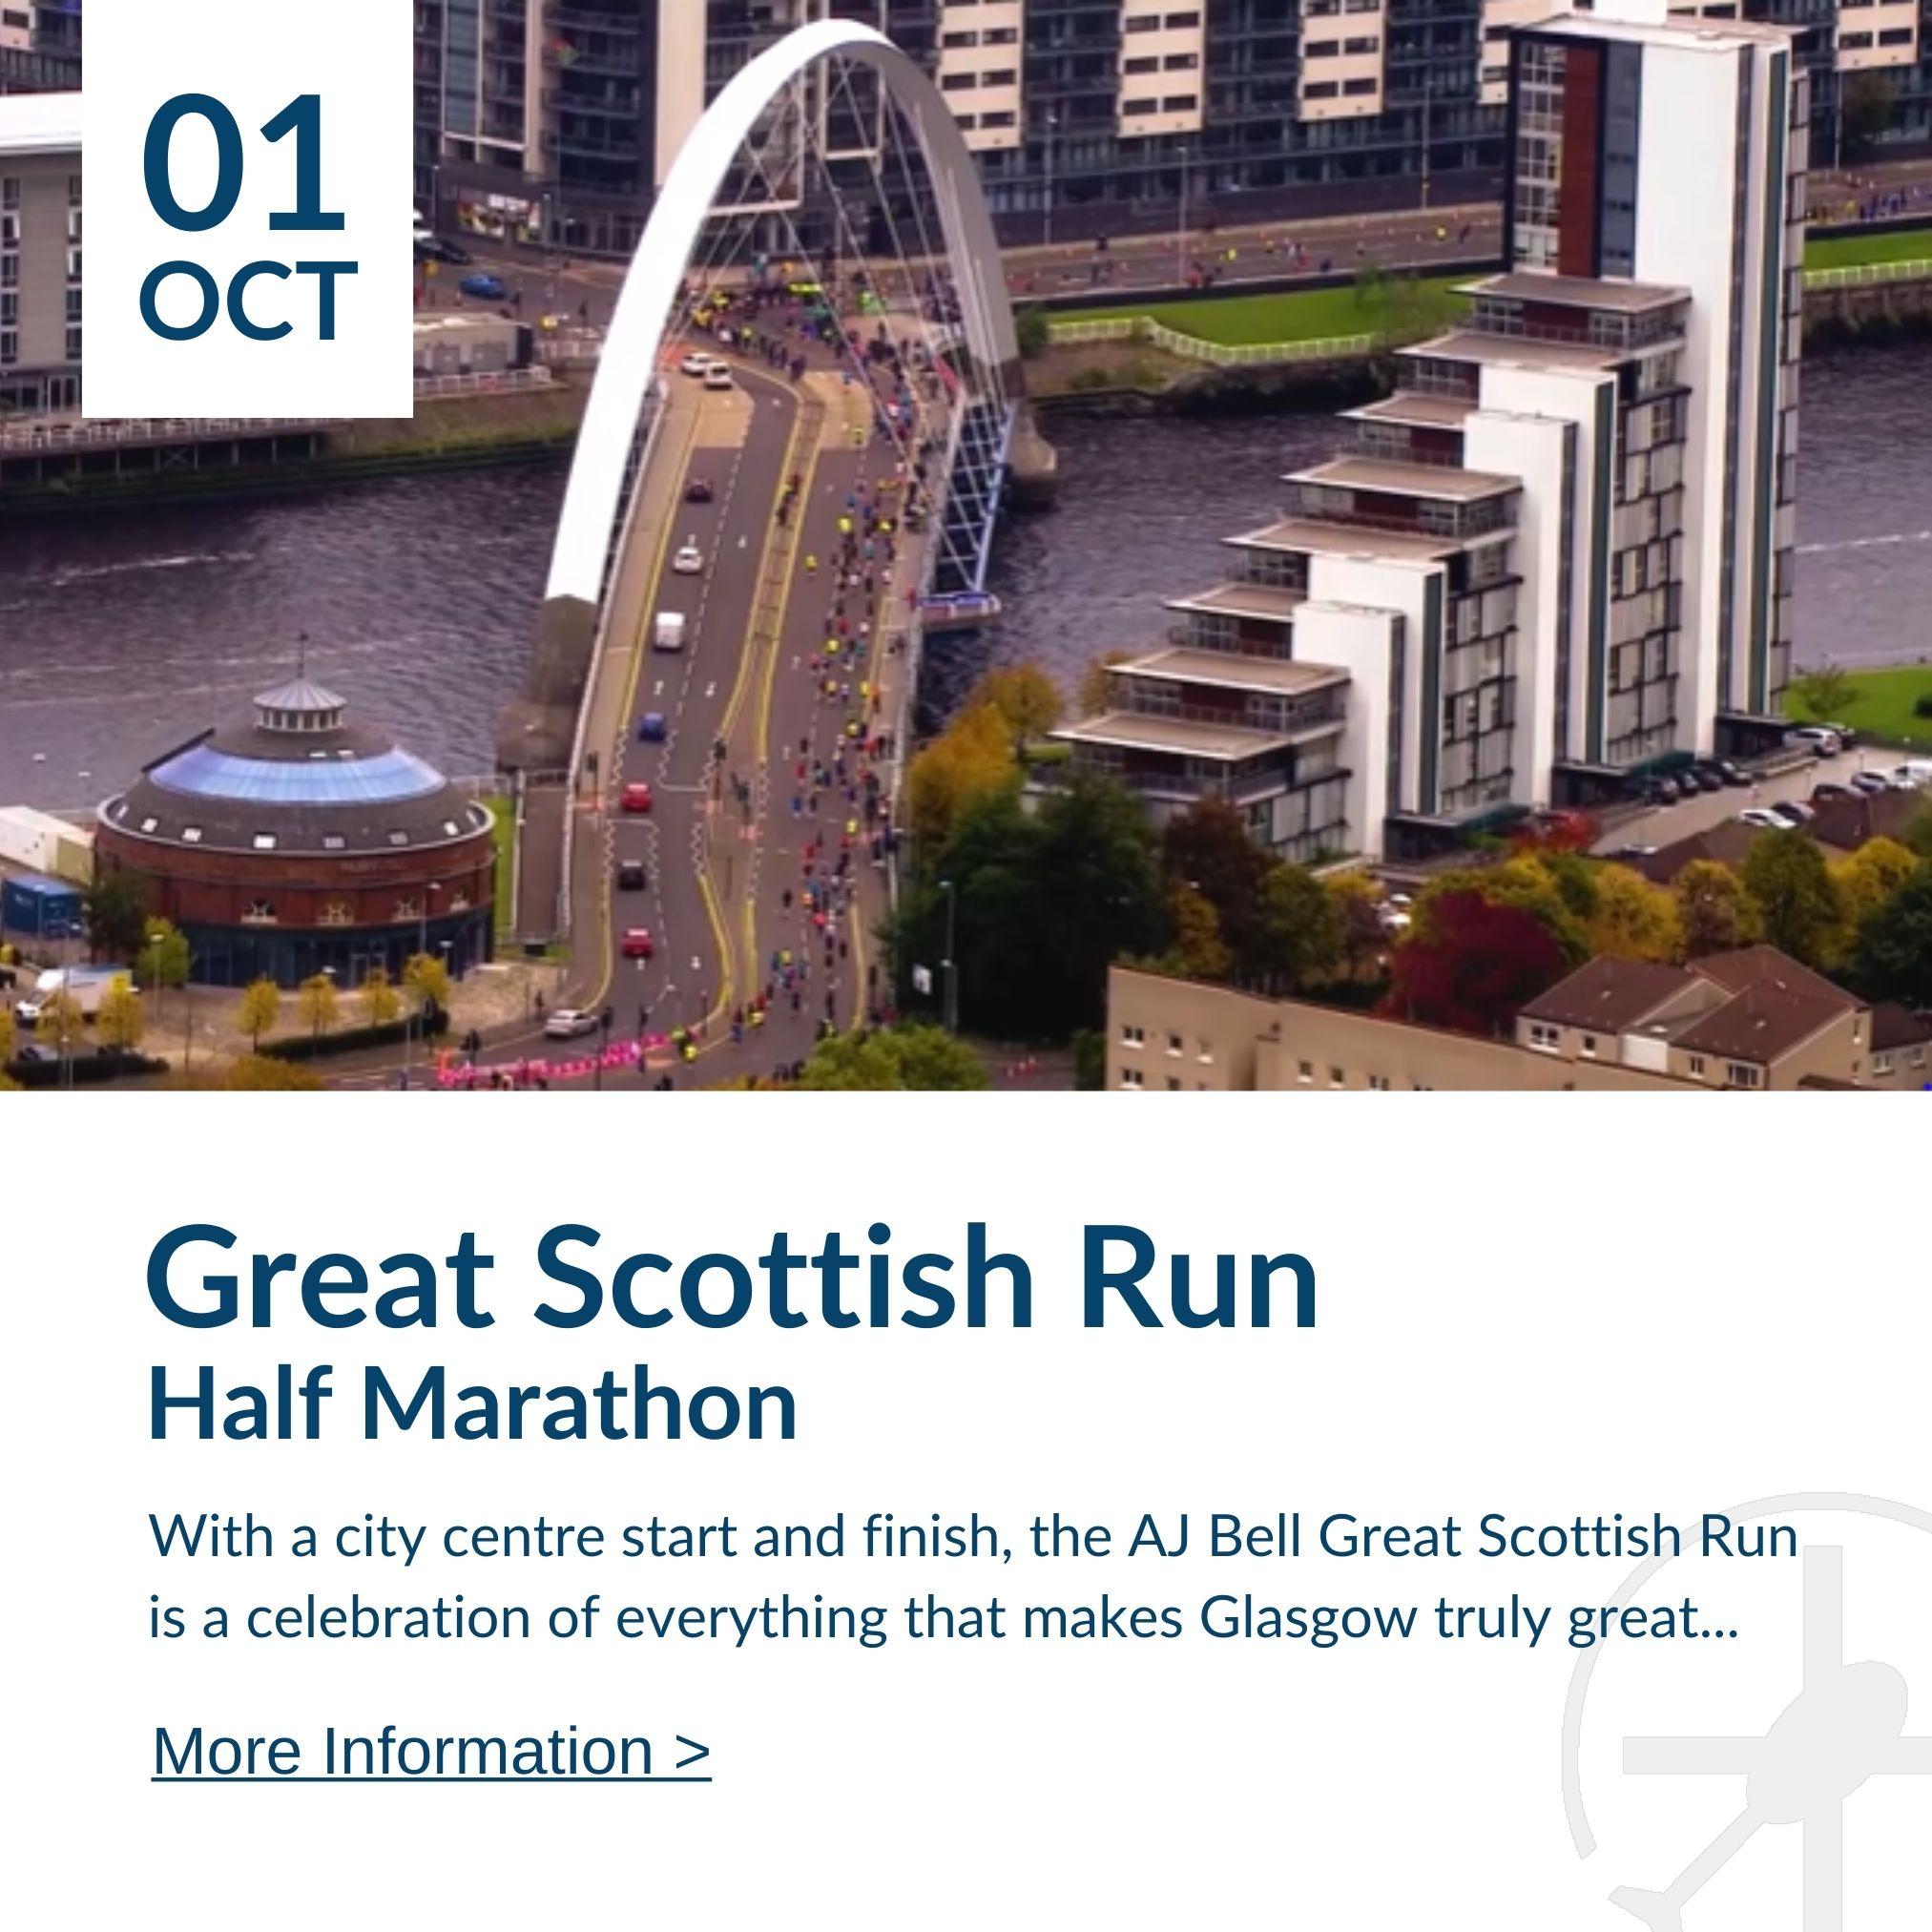 Events - Great Scottish Run